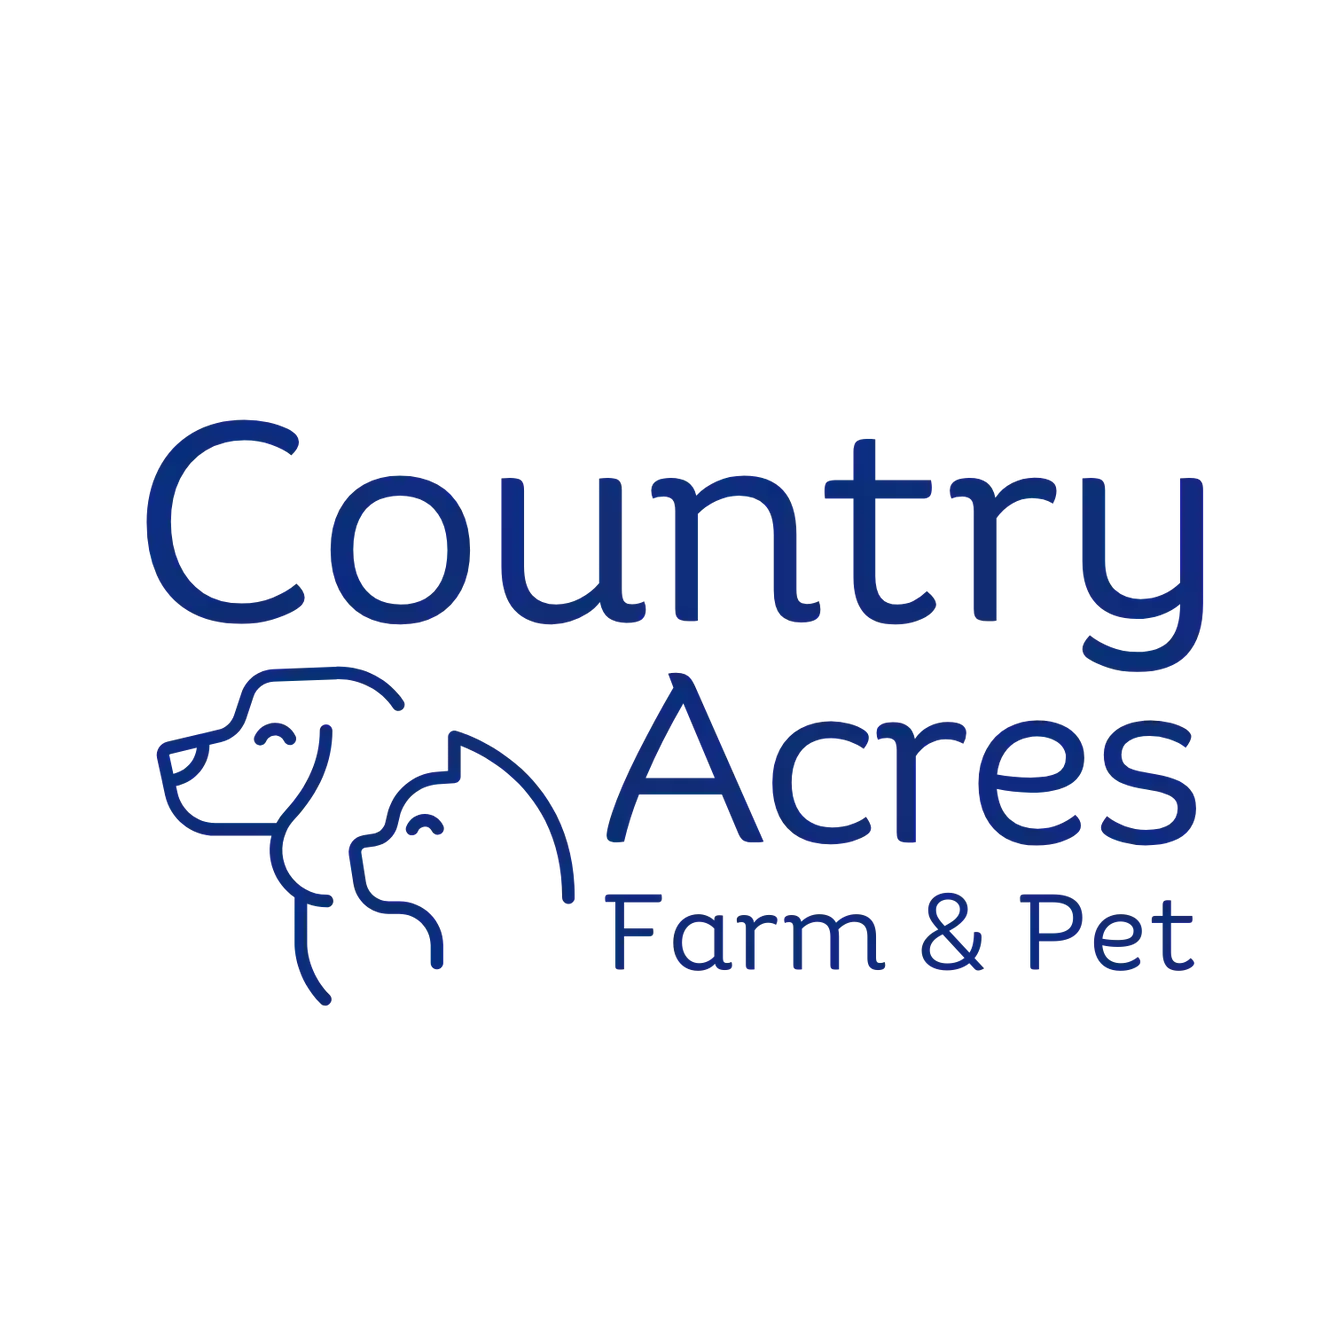 Country Acres Farm & Pet Center